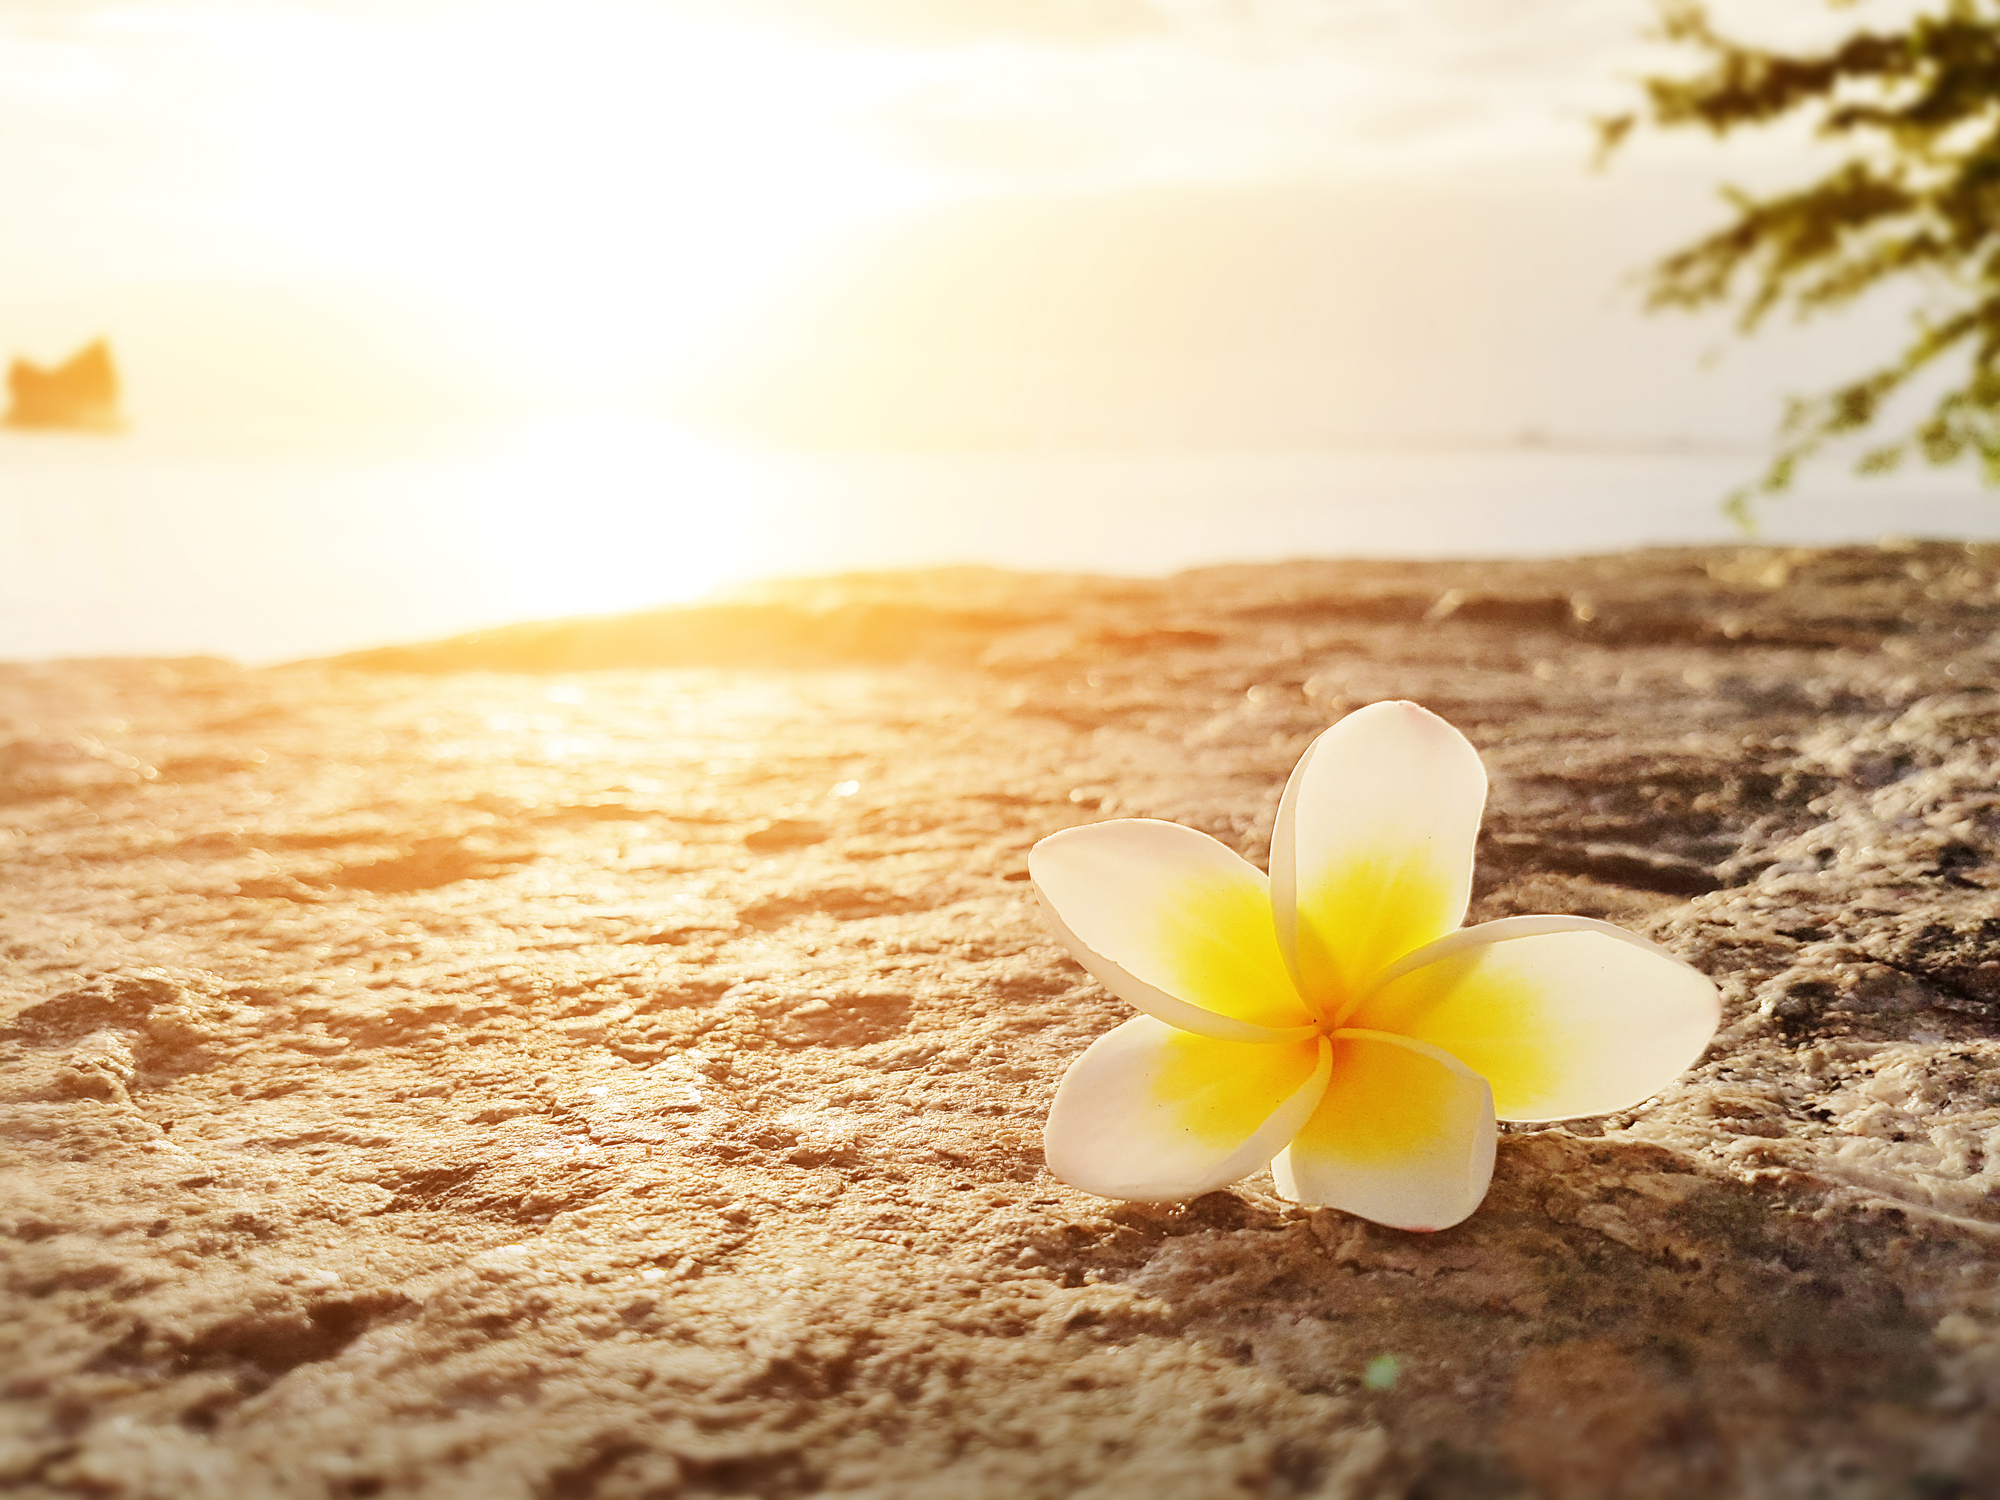 Frangipani Plumeria Flower On The Floor With Sunset Background At The Sea Beach アロハスマイル Aloha Smile